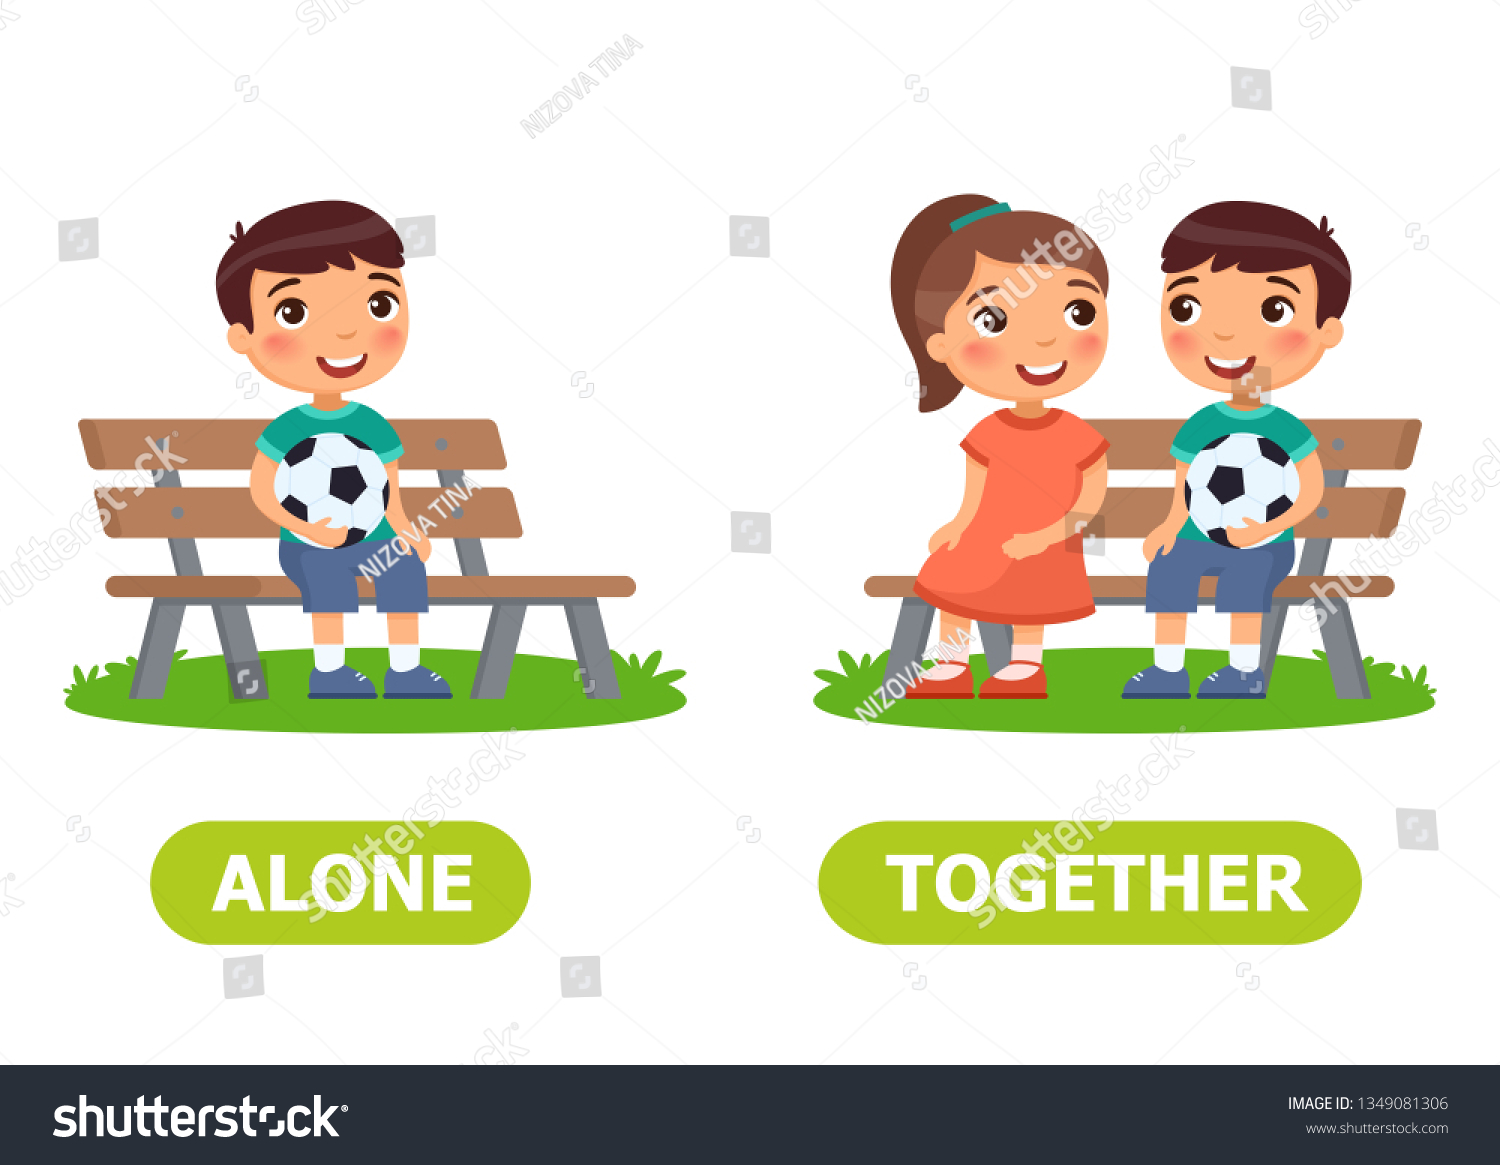 Alone_together_